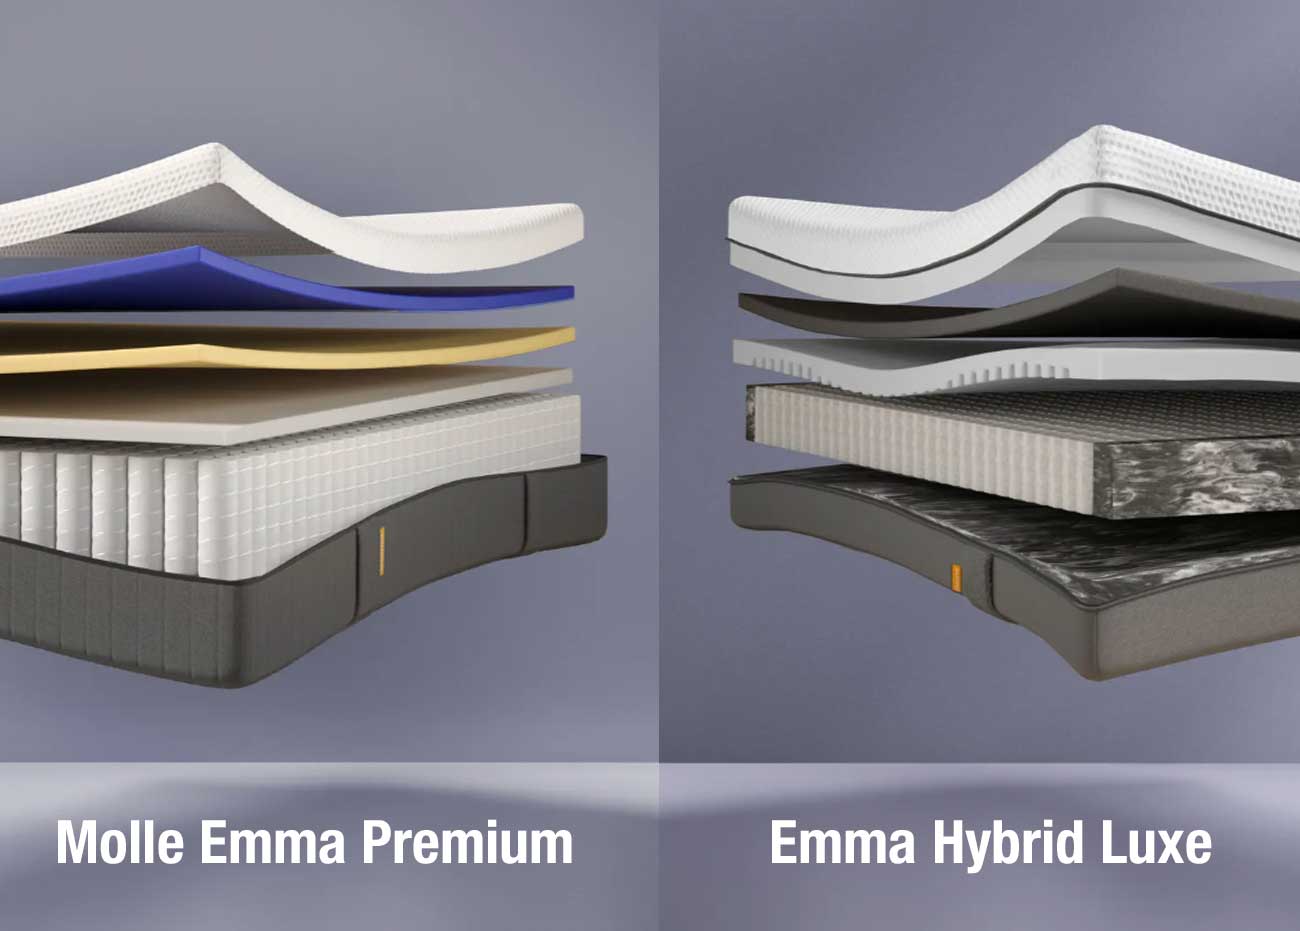 Emma Hybrid Luxe o Molle Emma Premium?